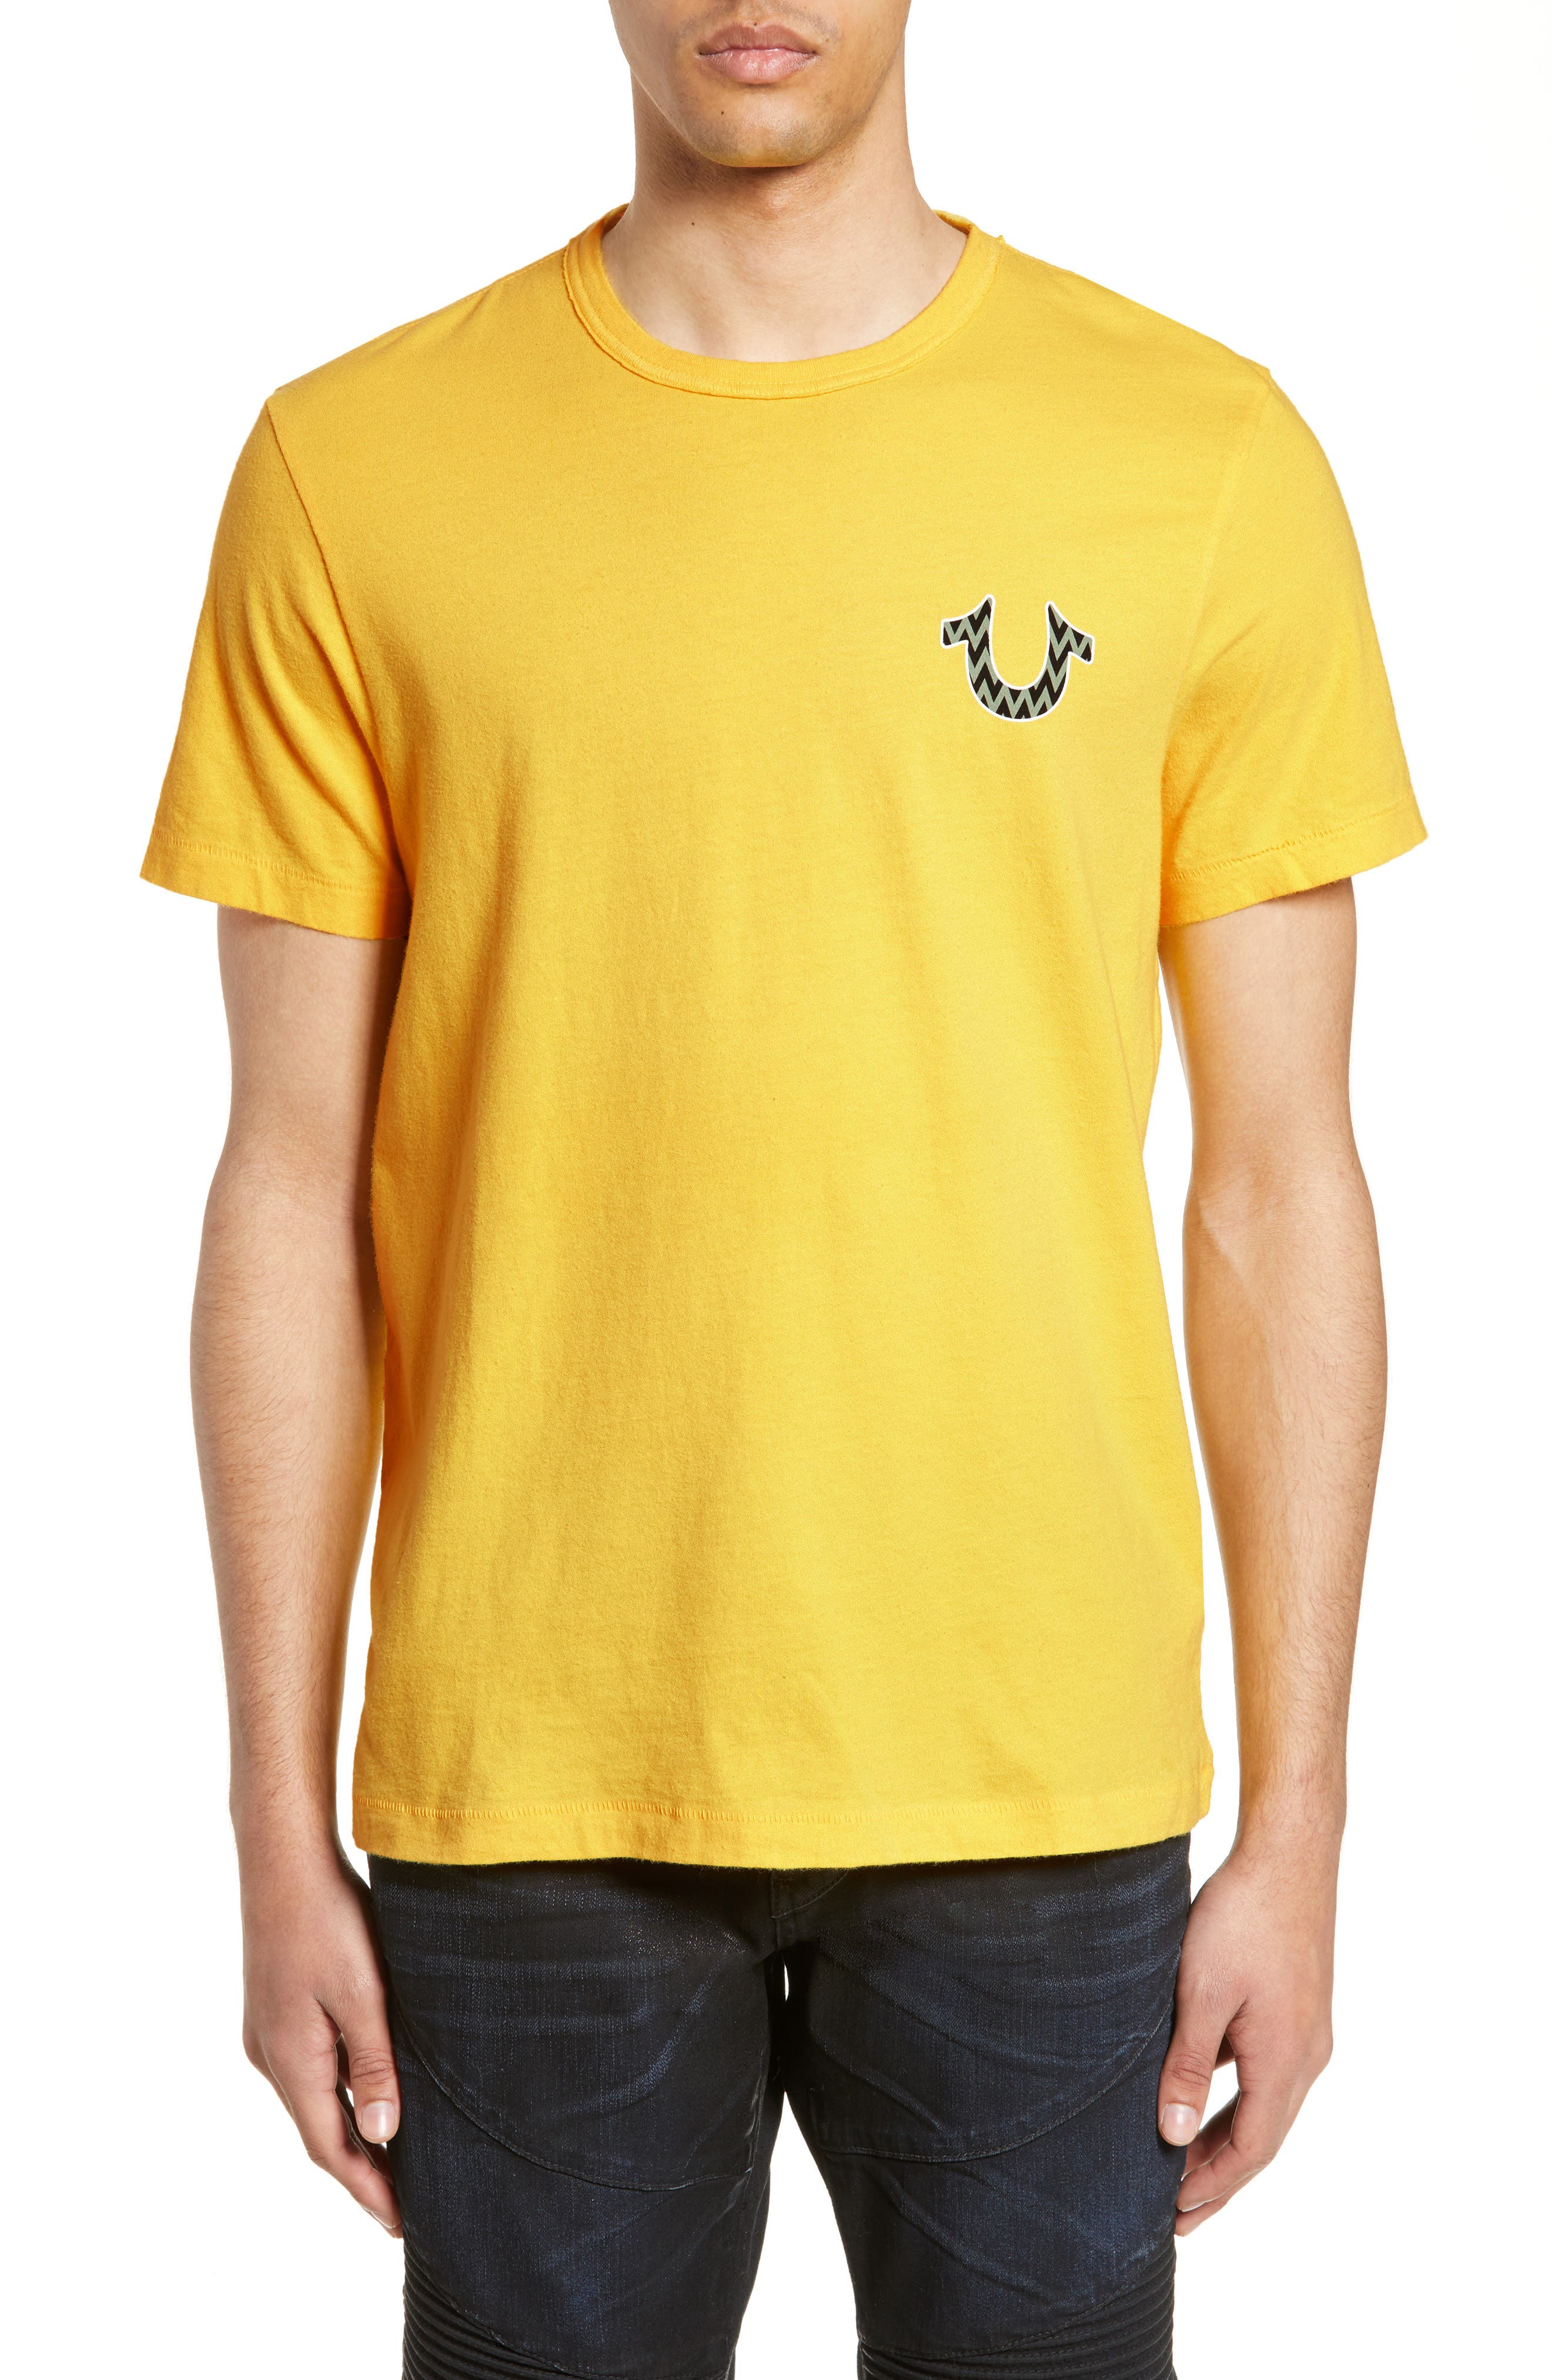 yellow true religion shirt